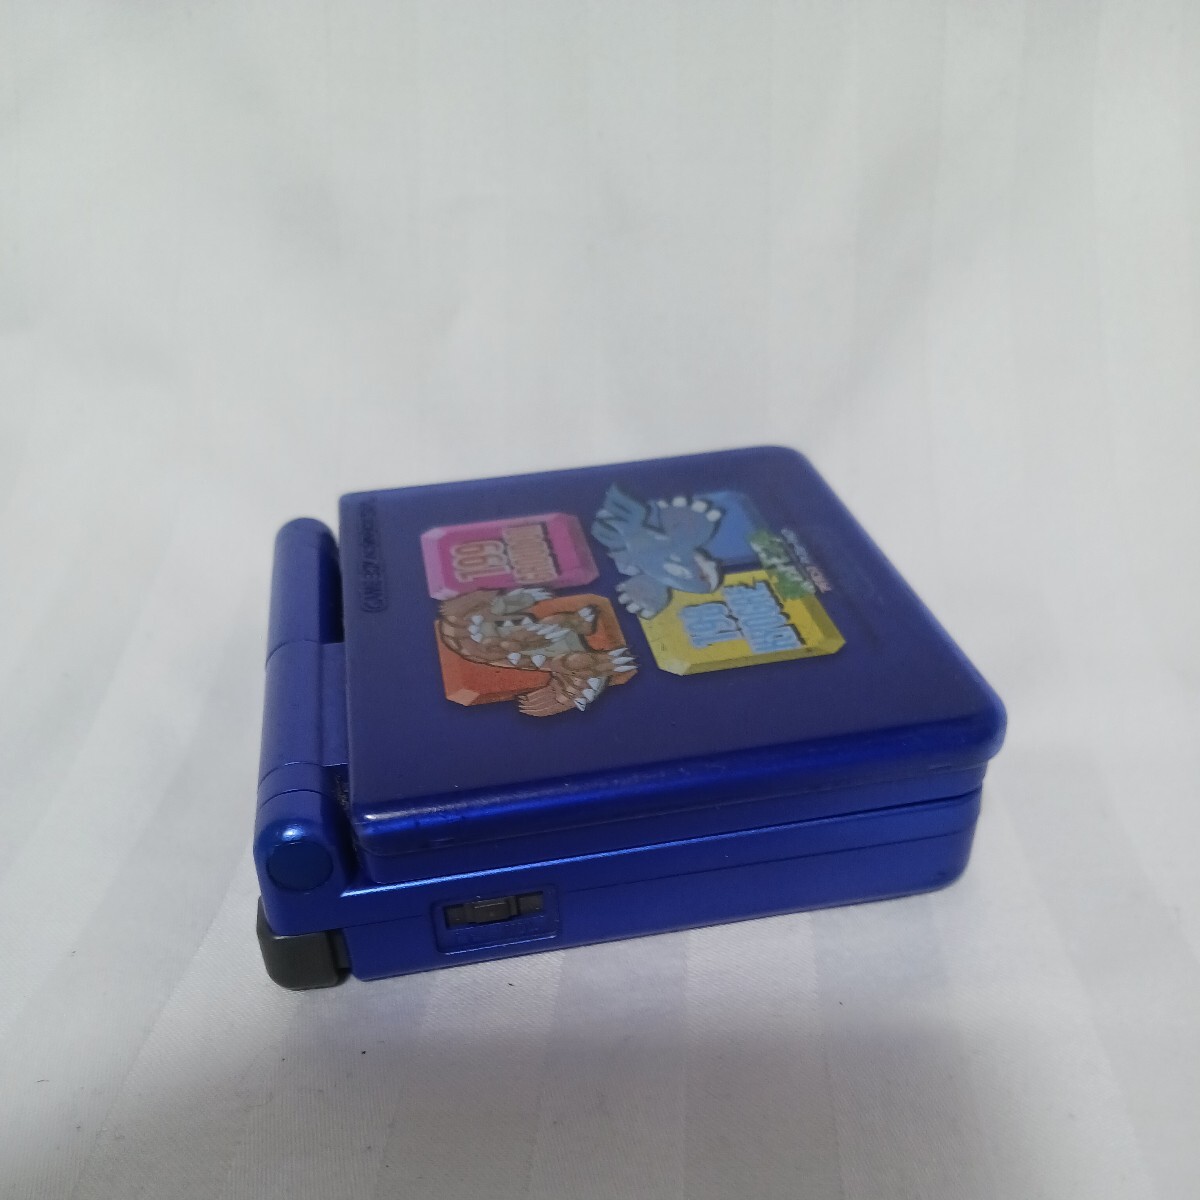  nintendo Game Boy Advance SP Pocket Monster with cover junk 